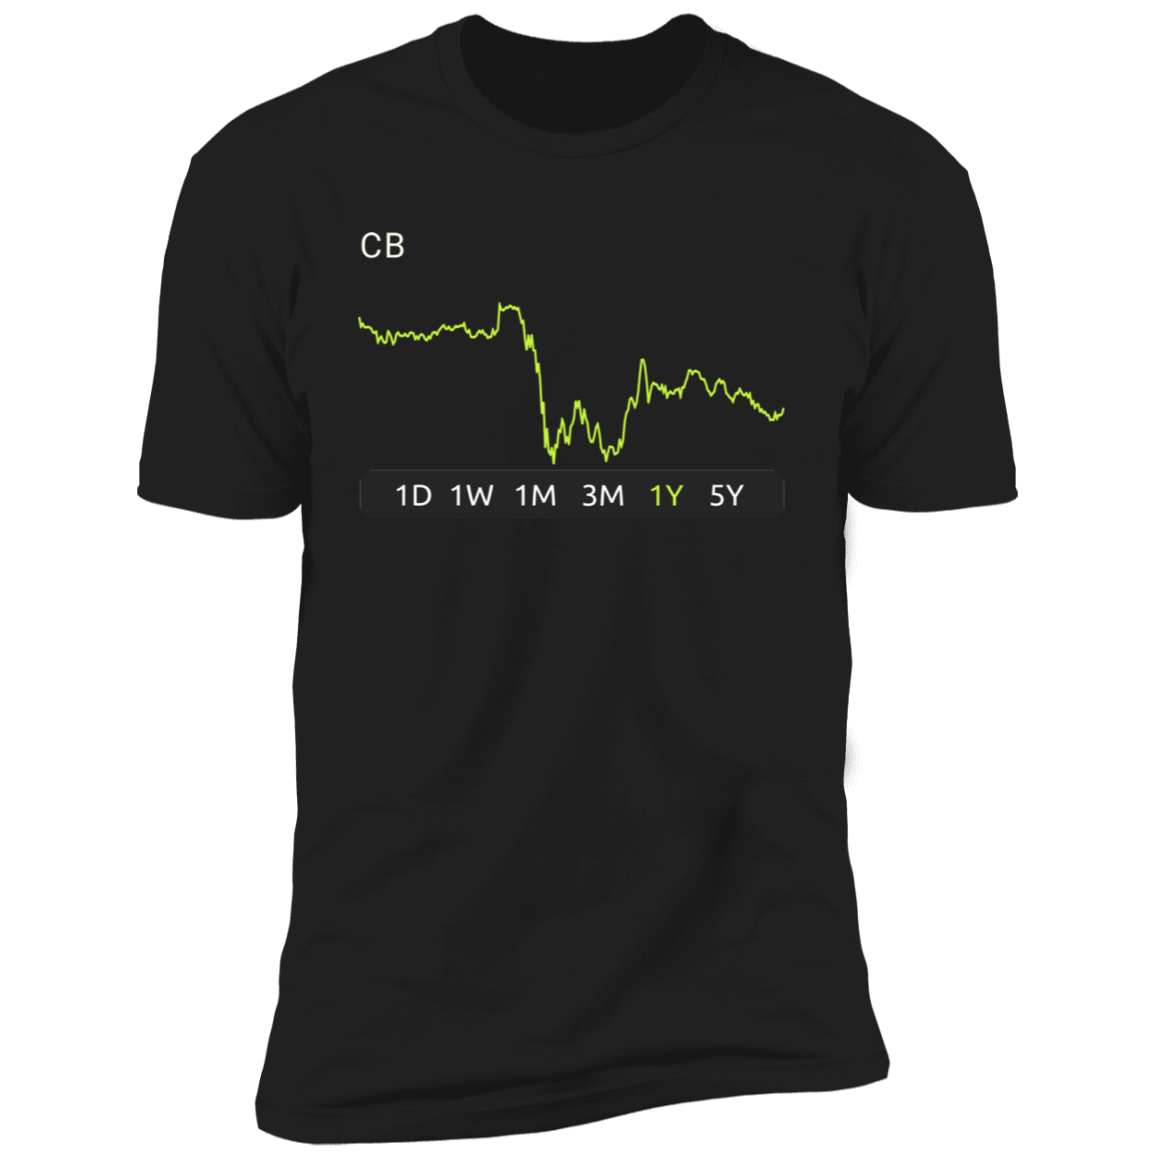 CB Stock 1y Premium T-Shirt